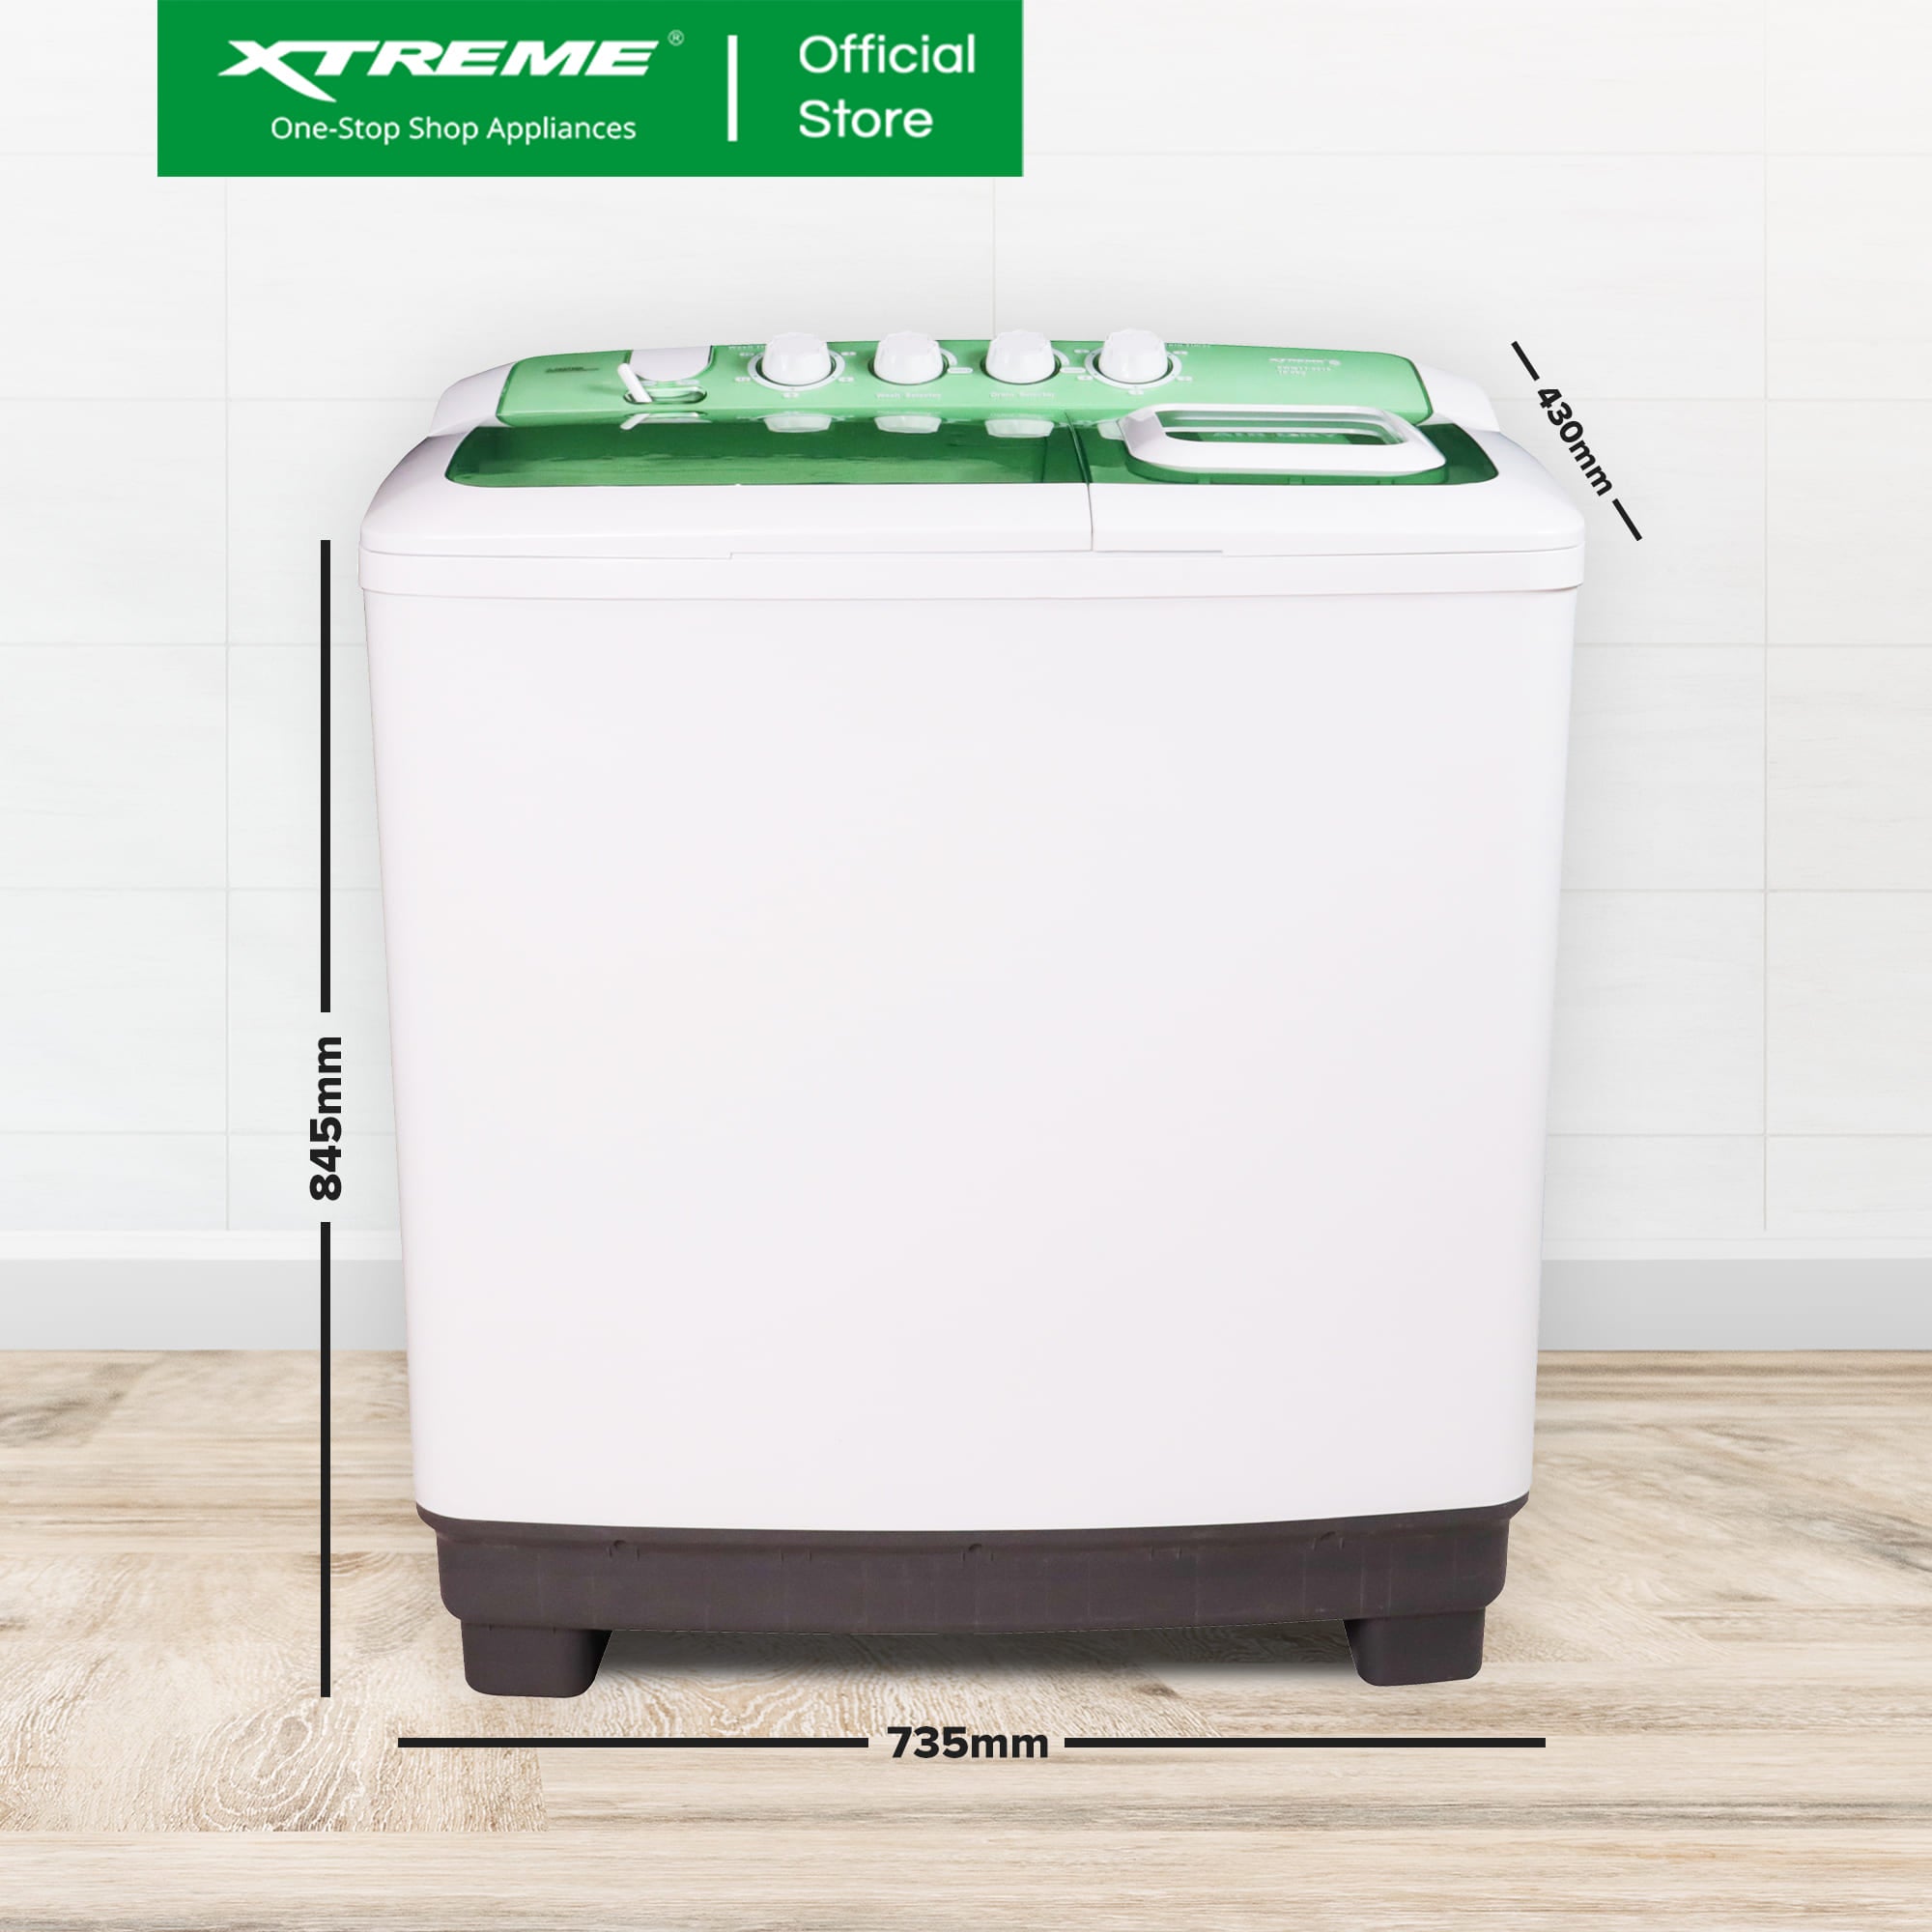 6KG XTREME COOL Twin Tub Washing Machine | XWMTT-0006